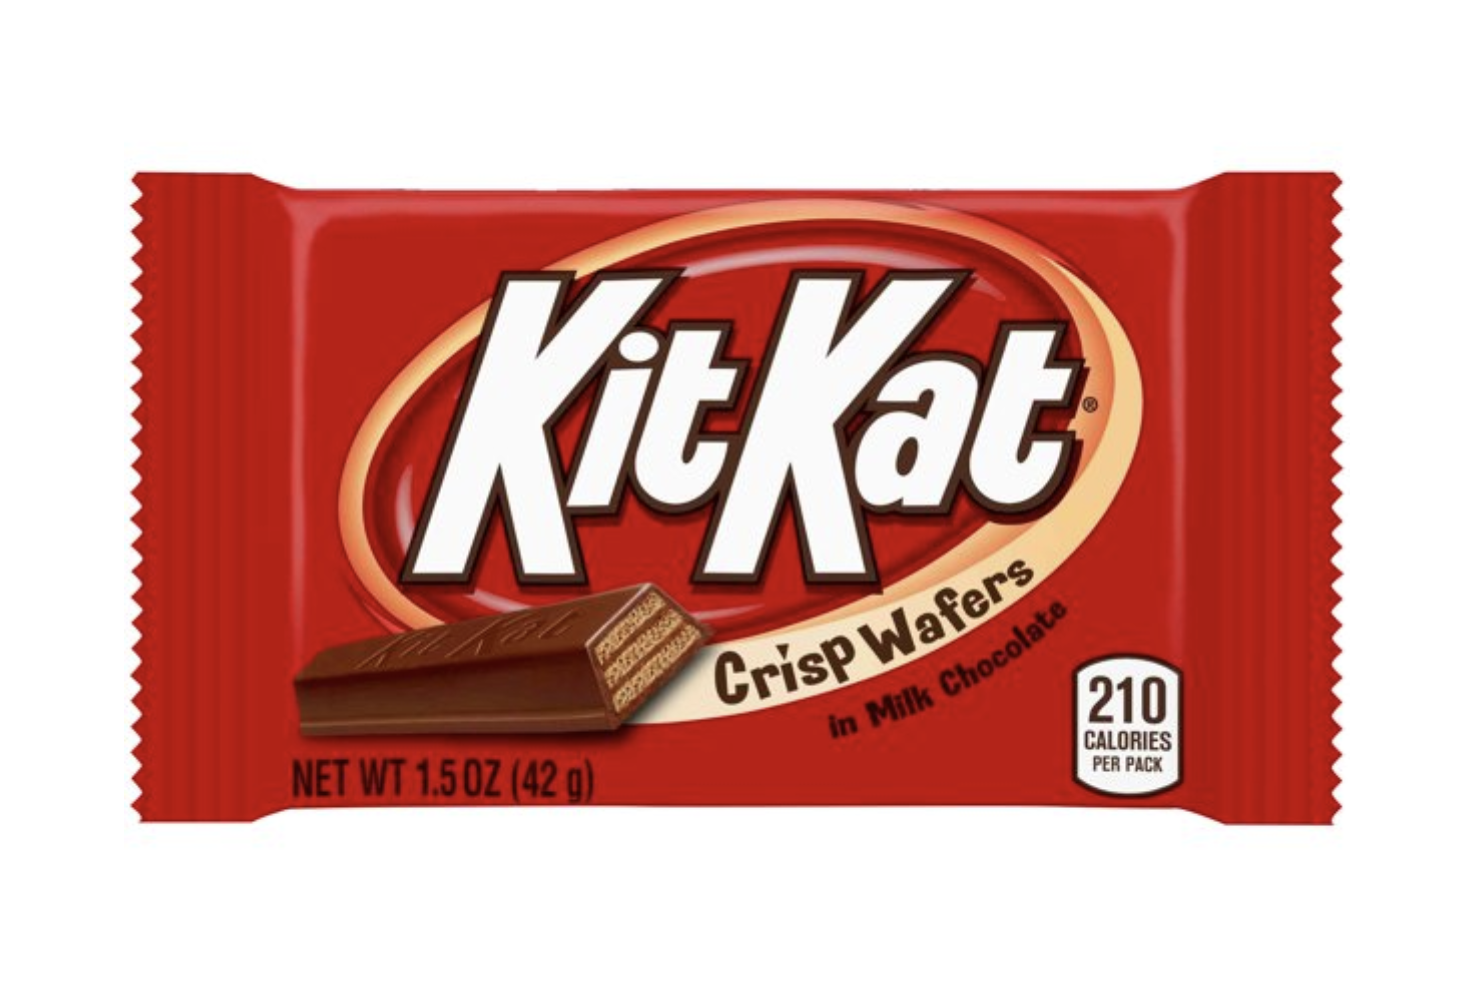 Packet of KitKat